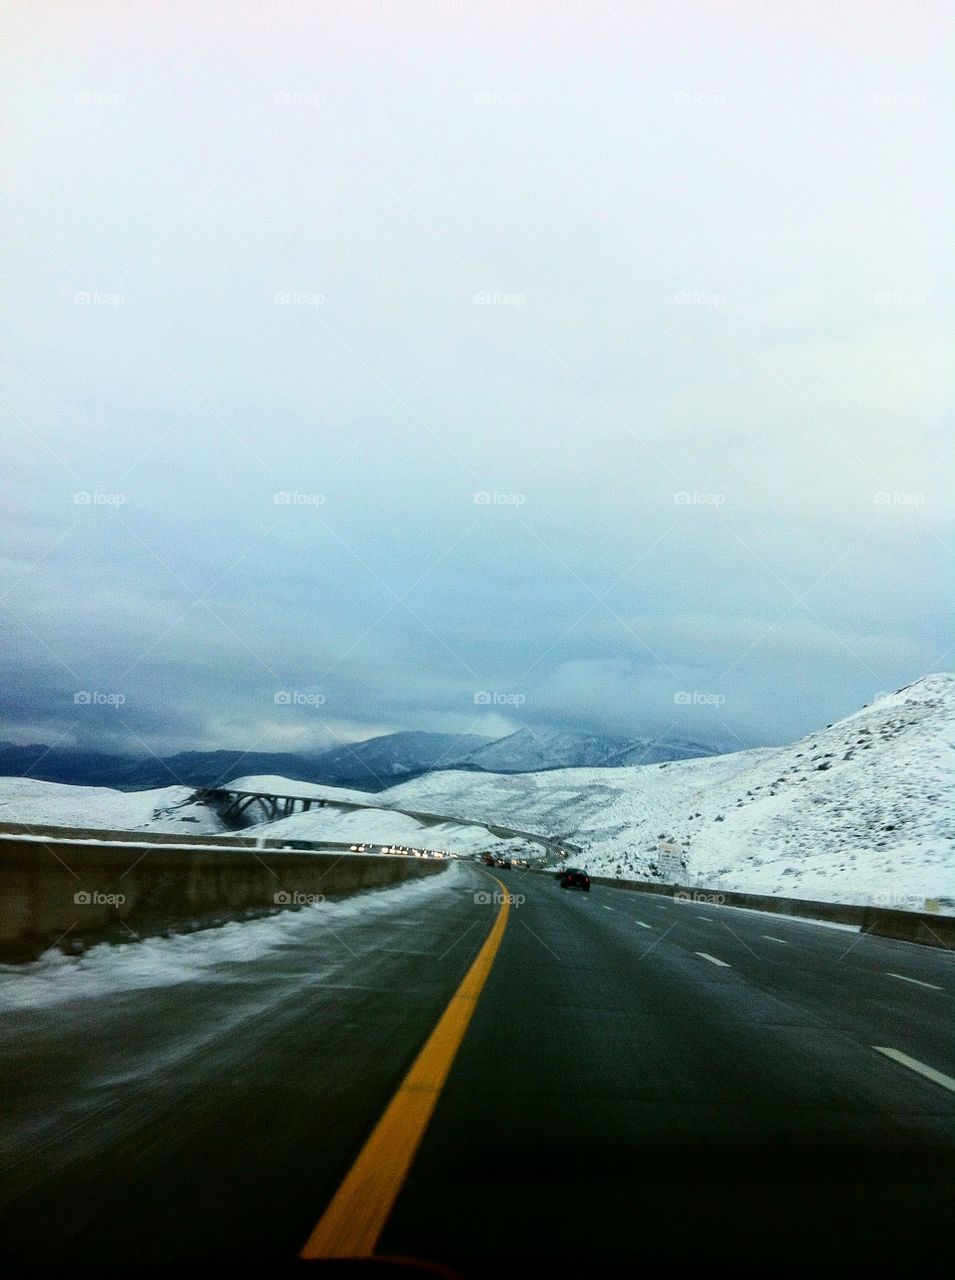 winter drive. calm winter highway drive